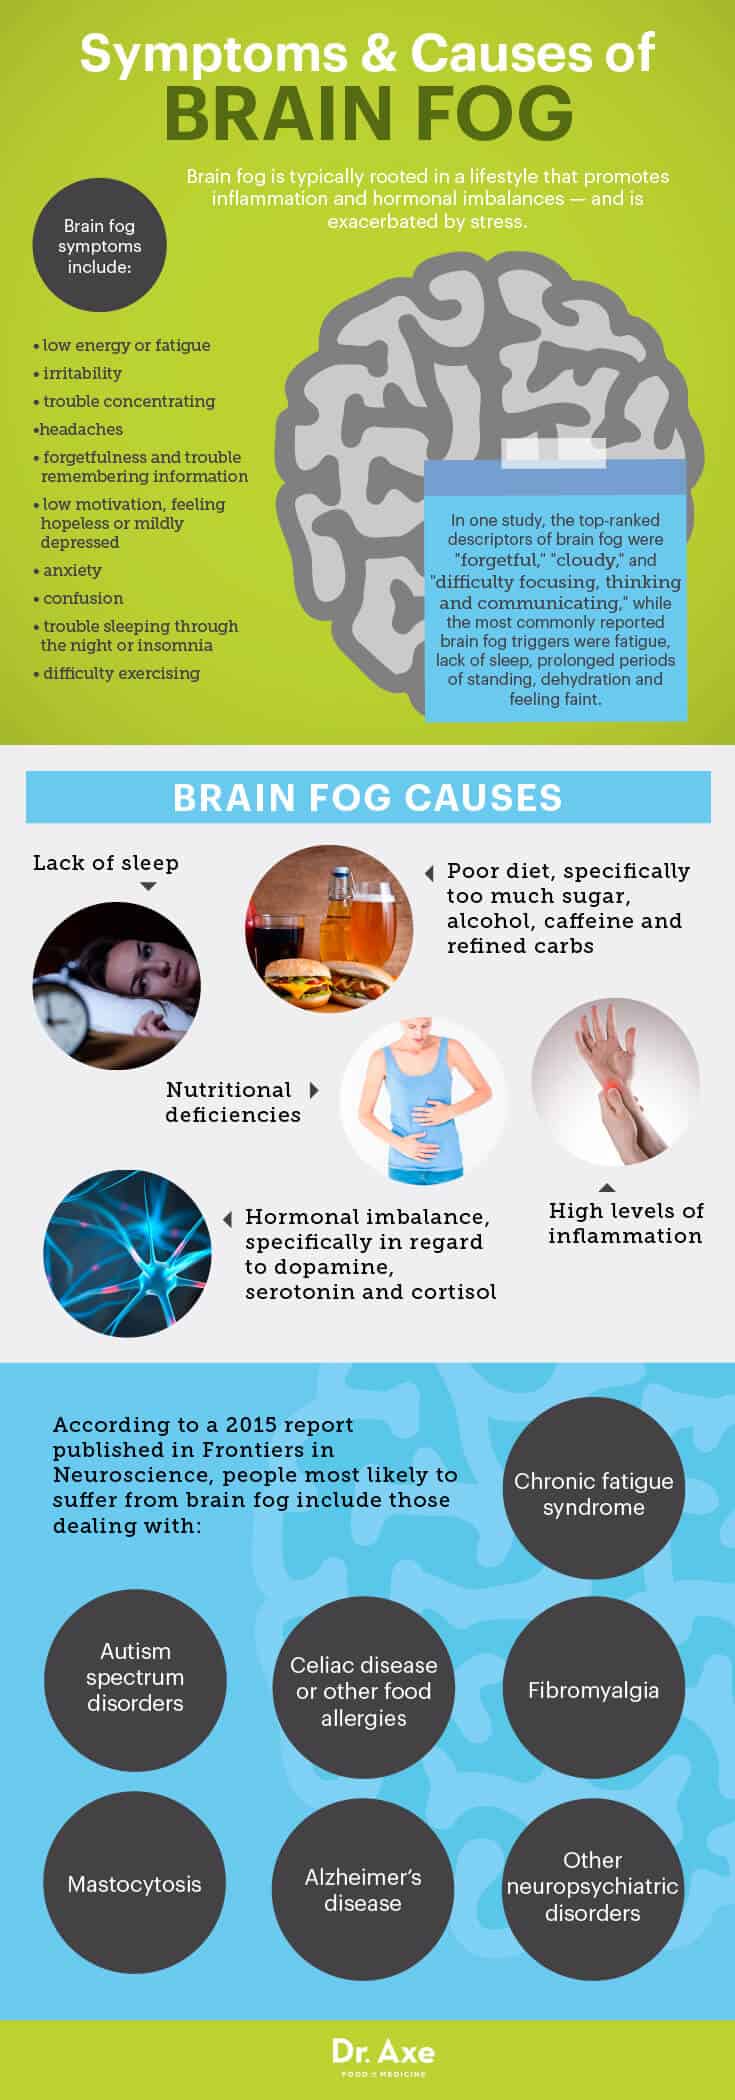 Brain fog symptoms & causes - Dr. Axe